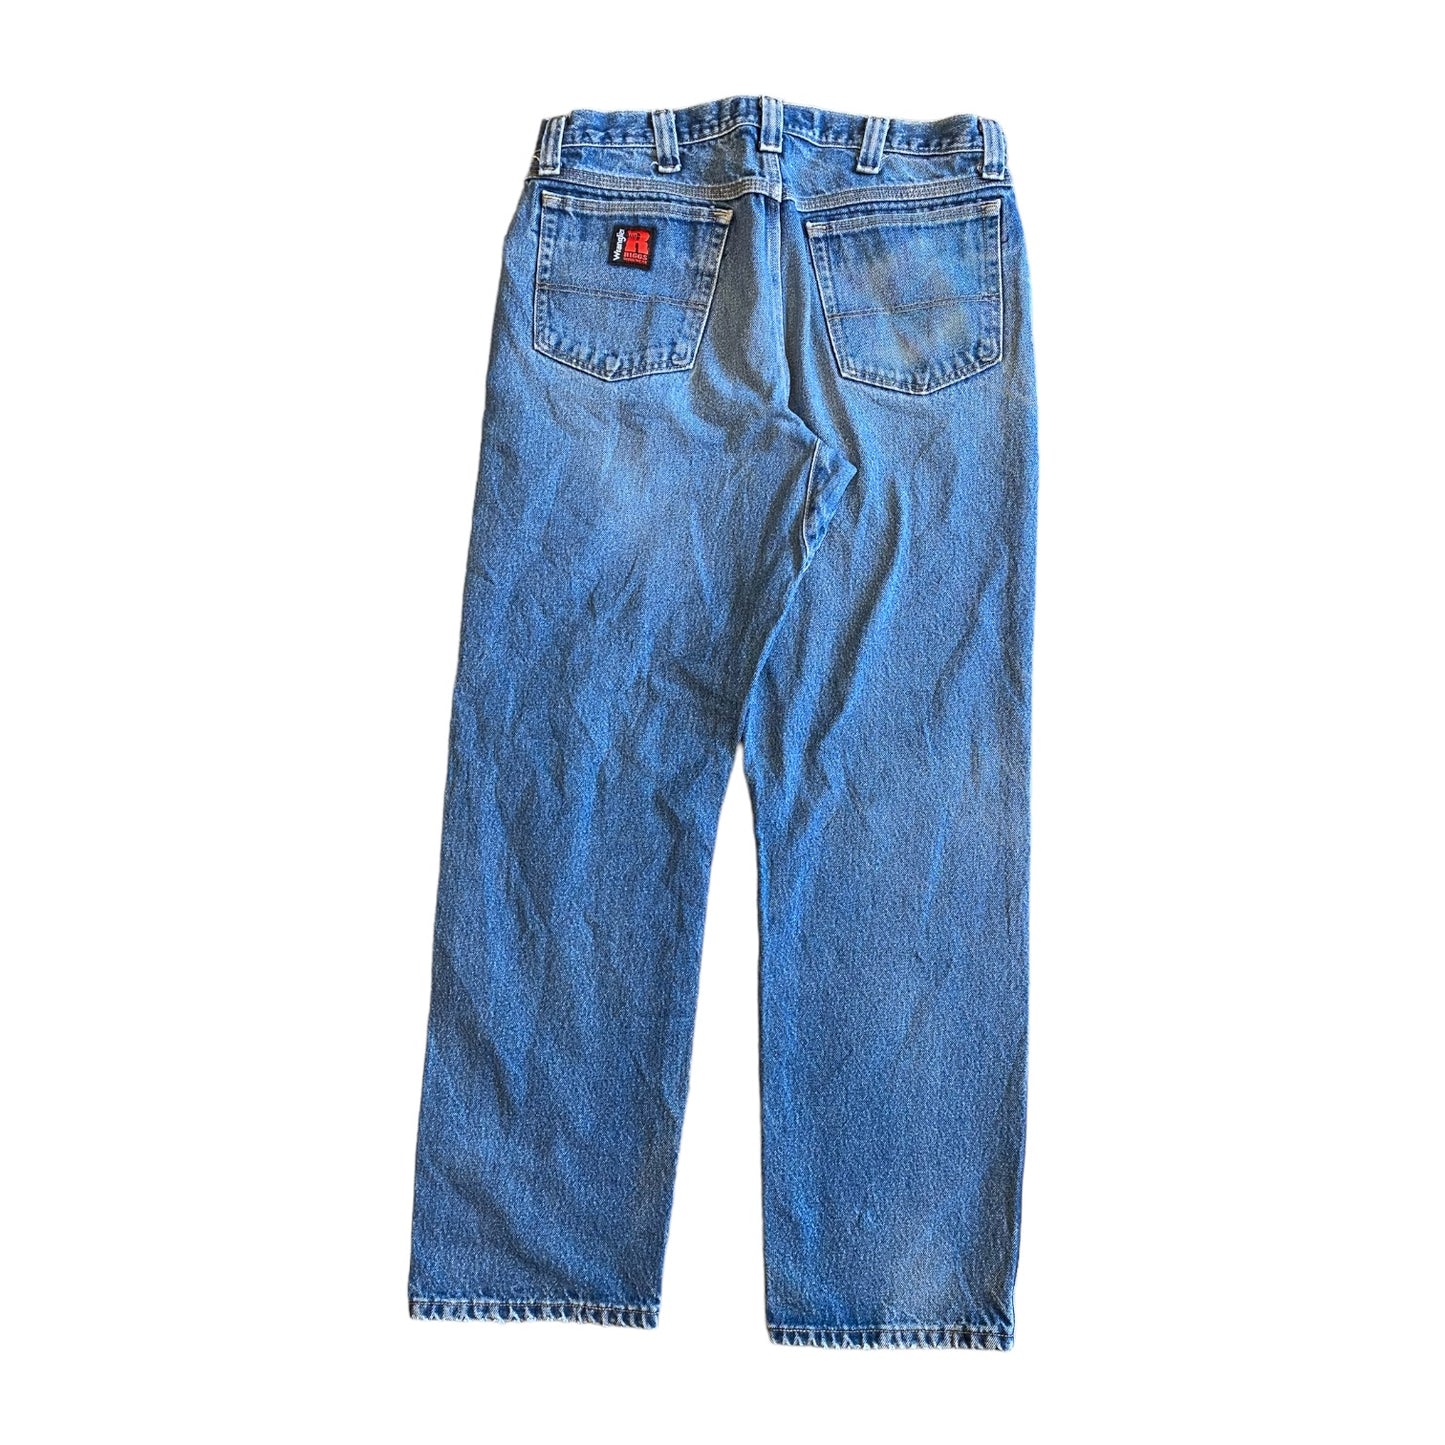 Wrangler Vintage Riggs Workwear Jeans